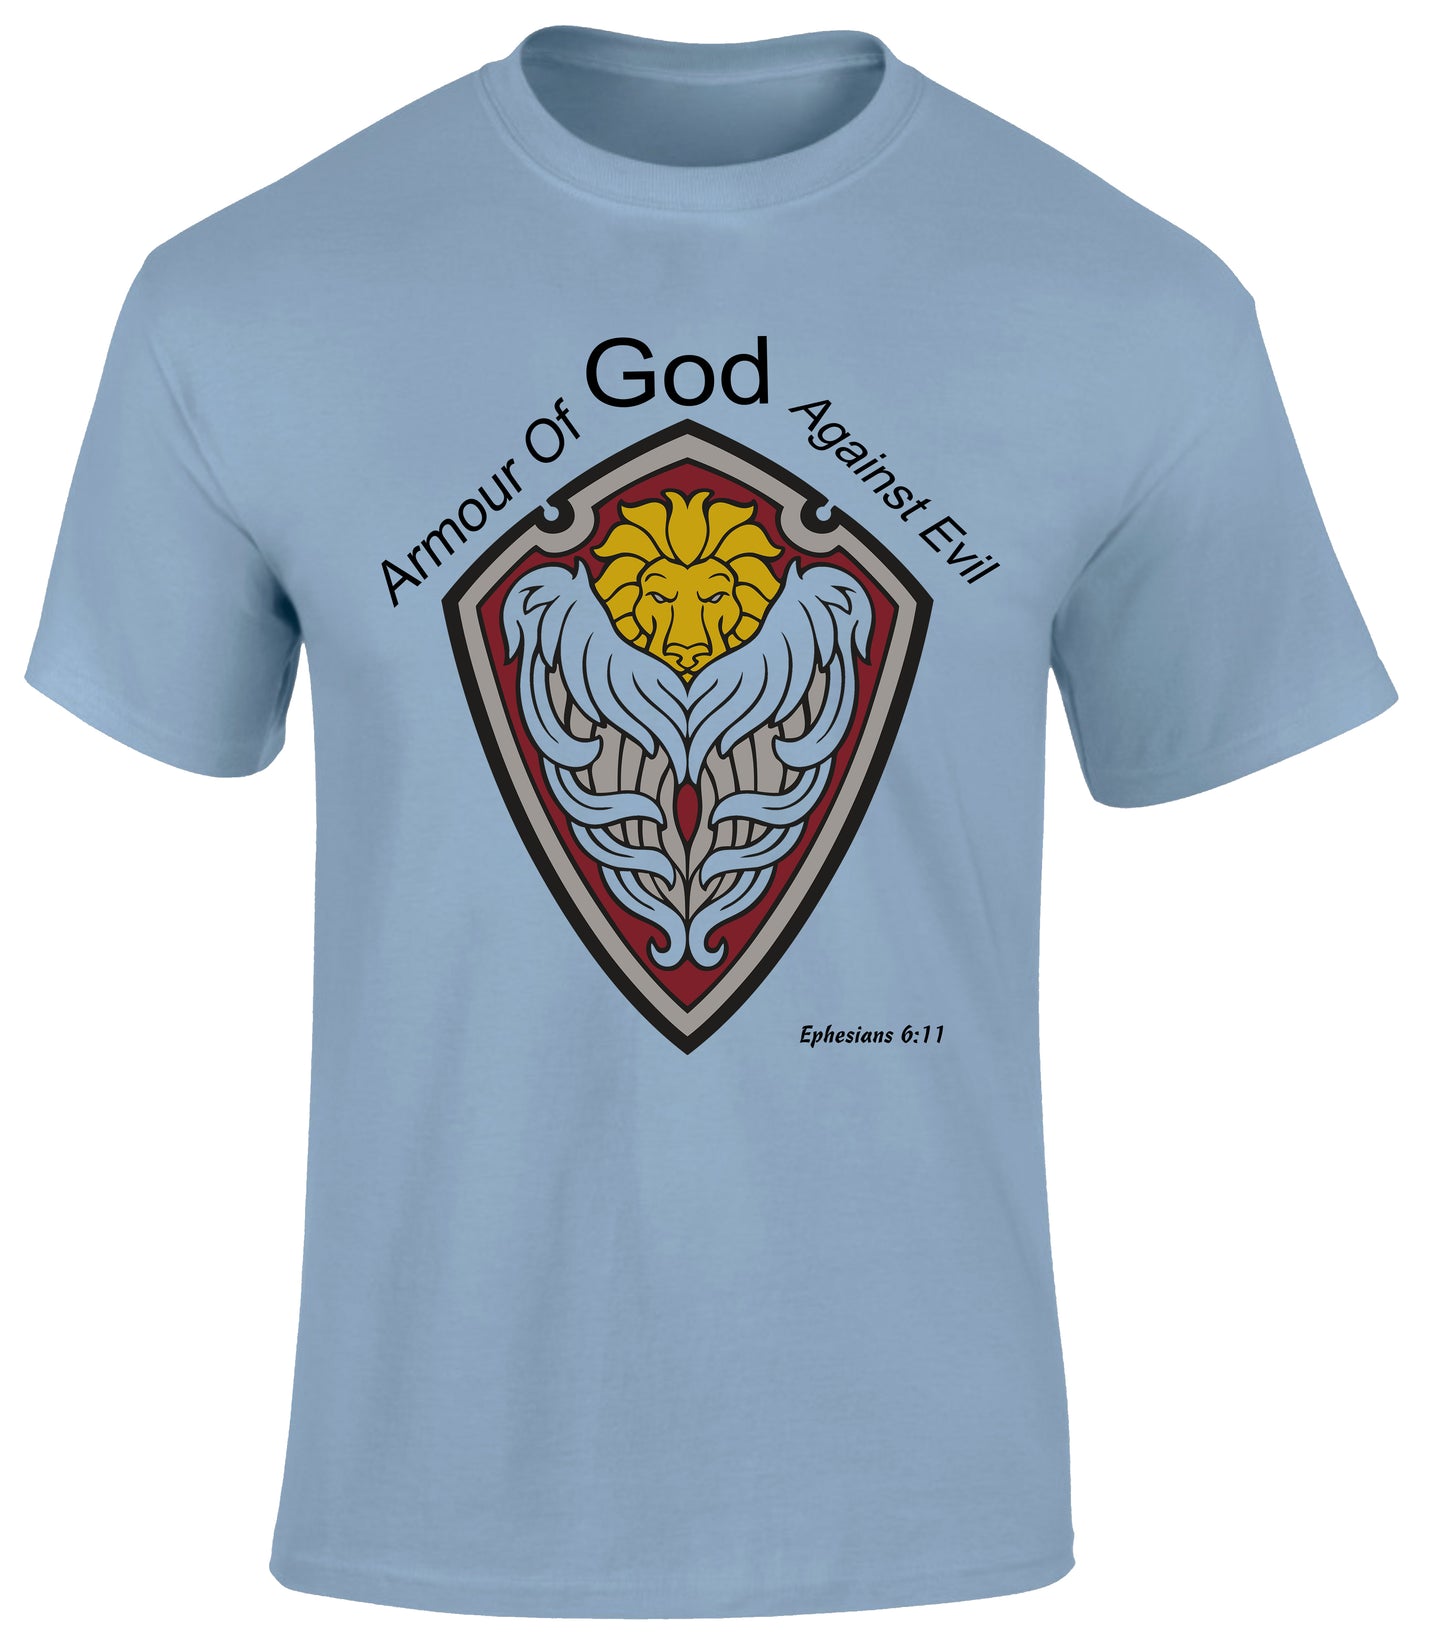 Armor Of God T-shirt